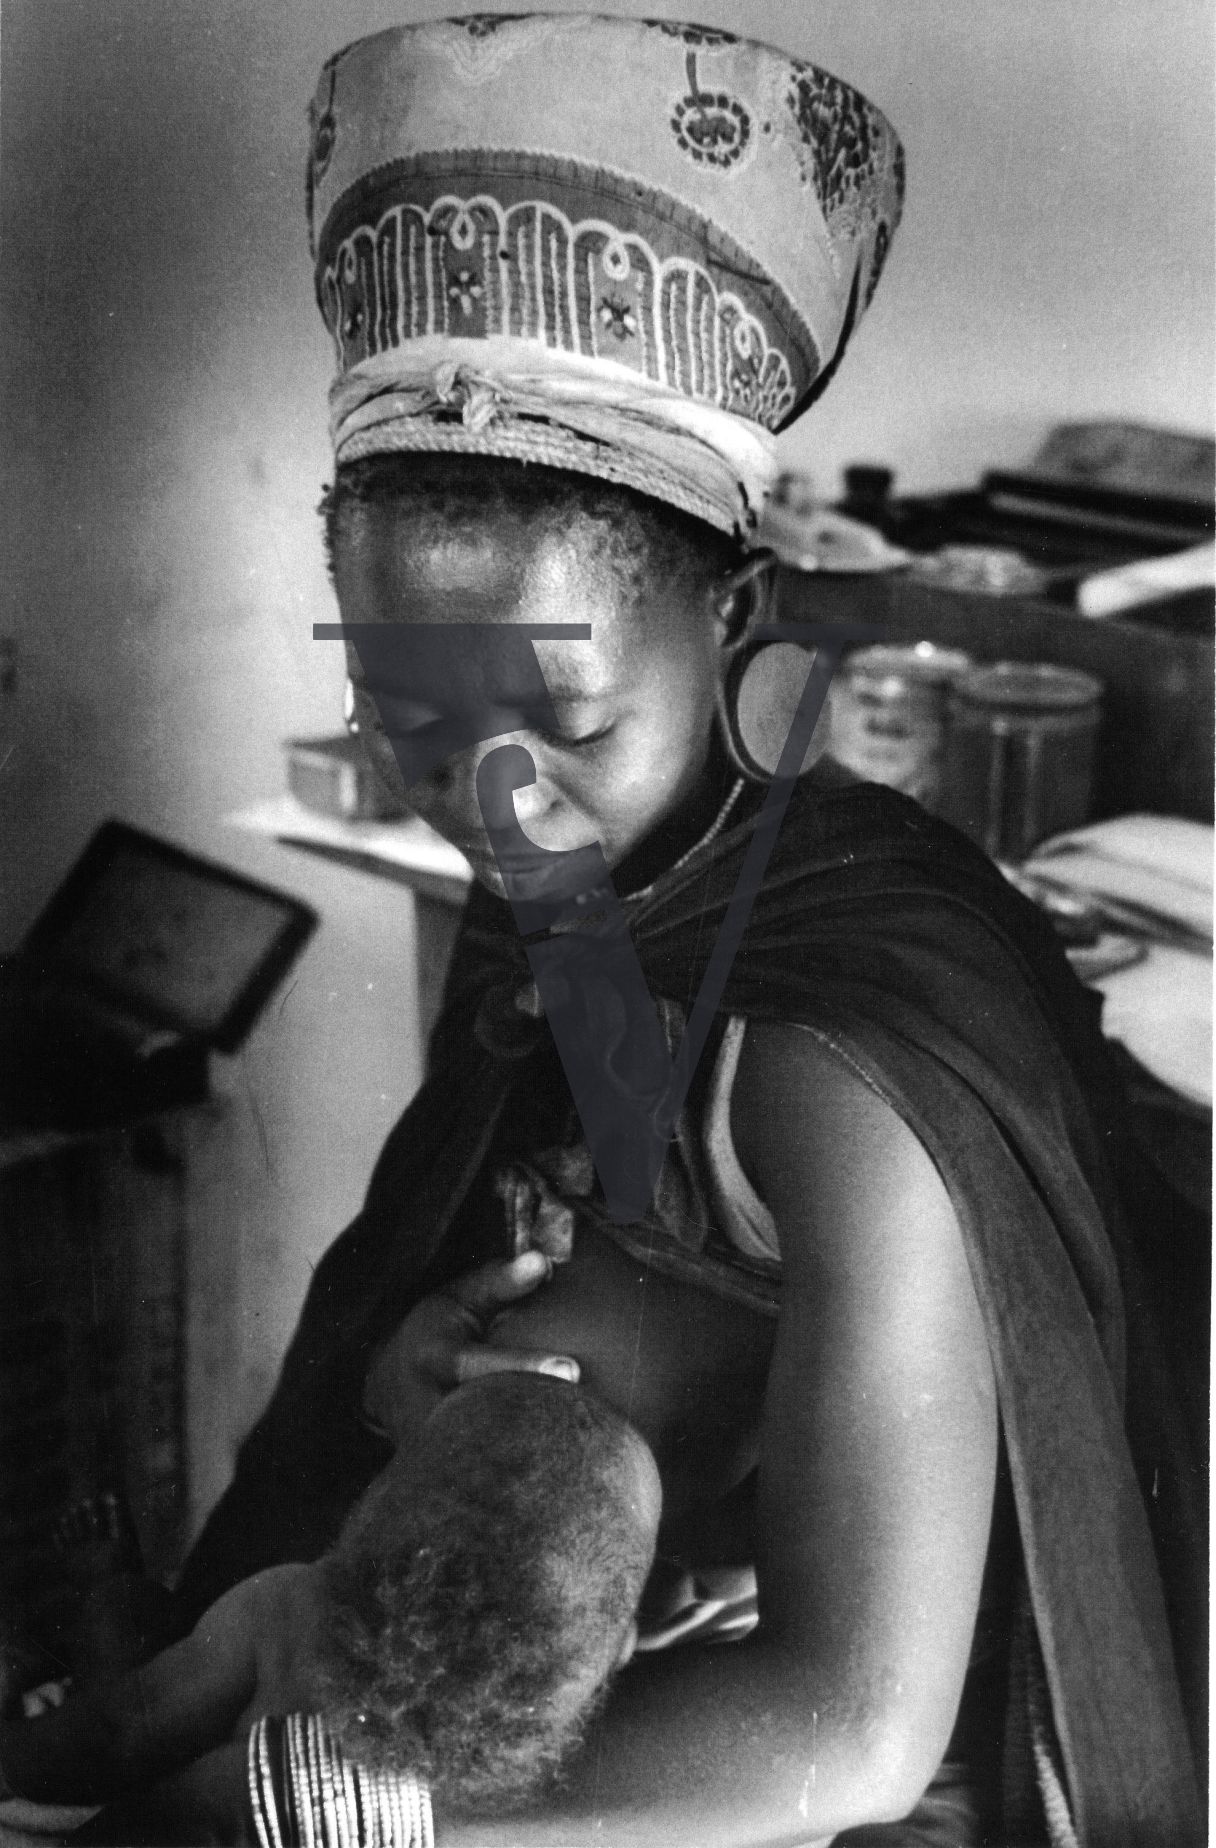 Zululand Mother, breastfeeding, black and white portrait.